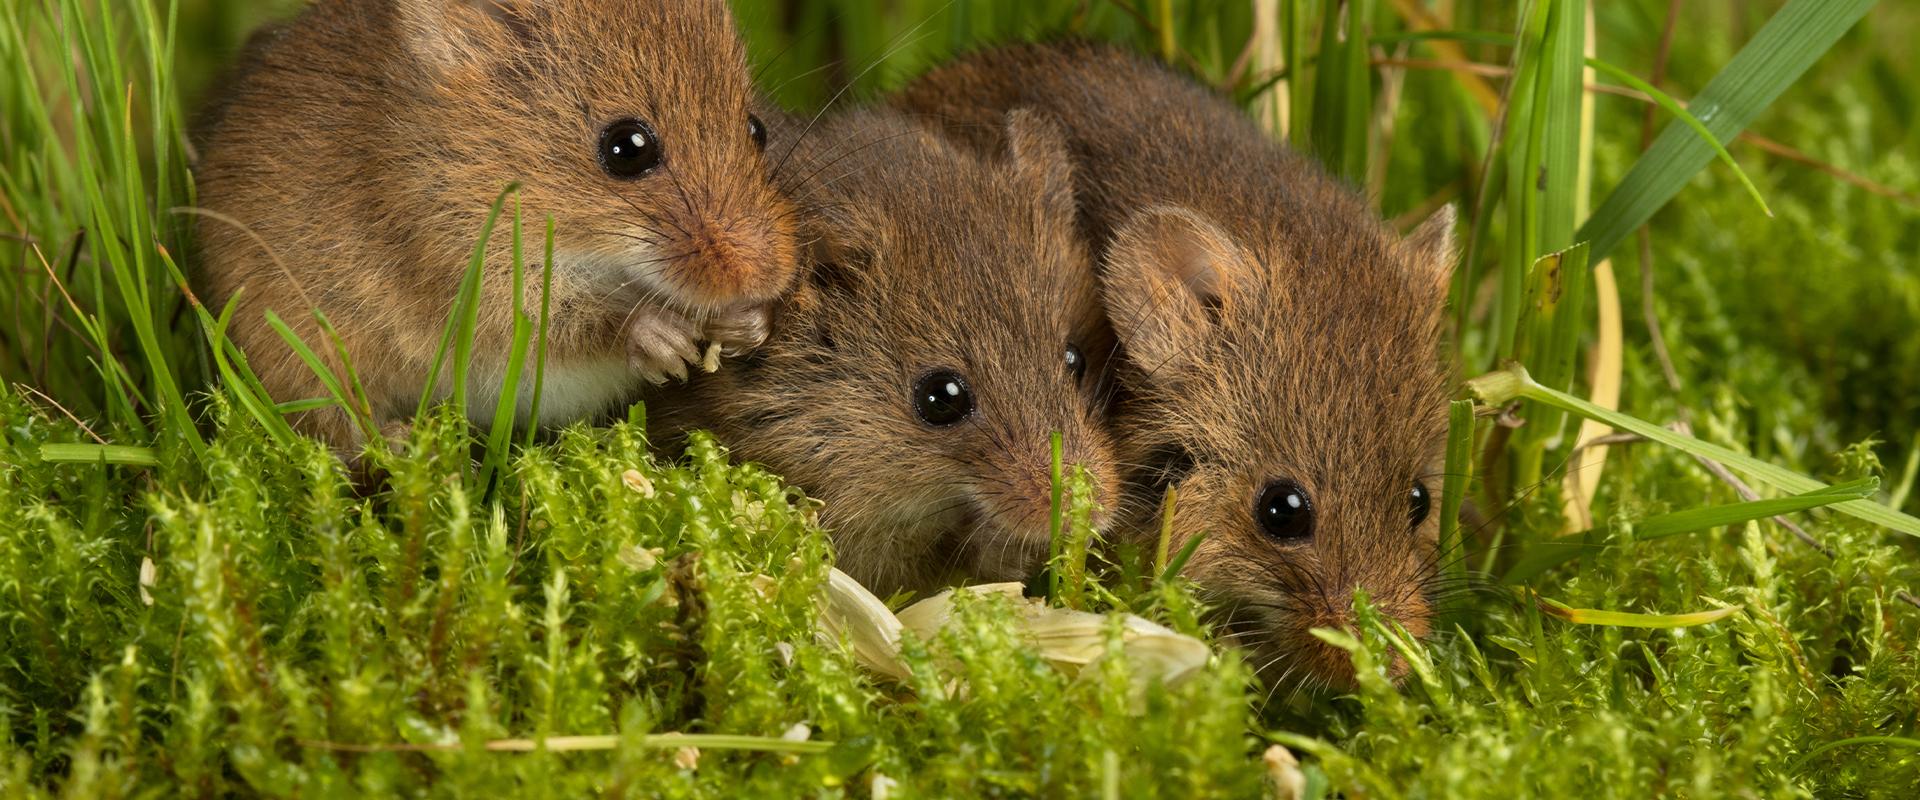 three mice in the grass